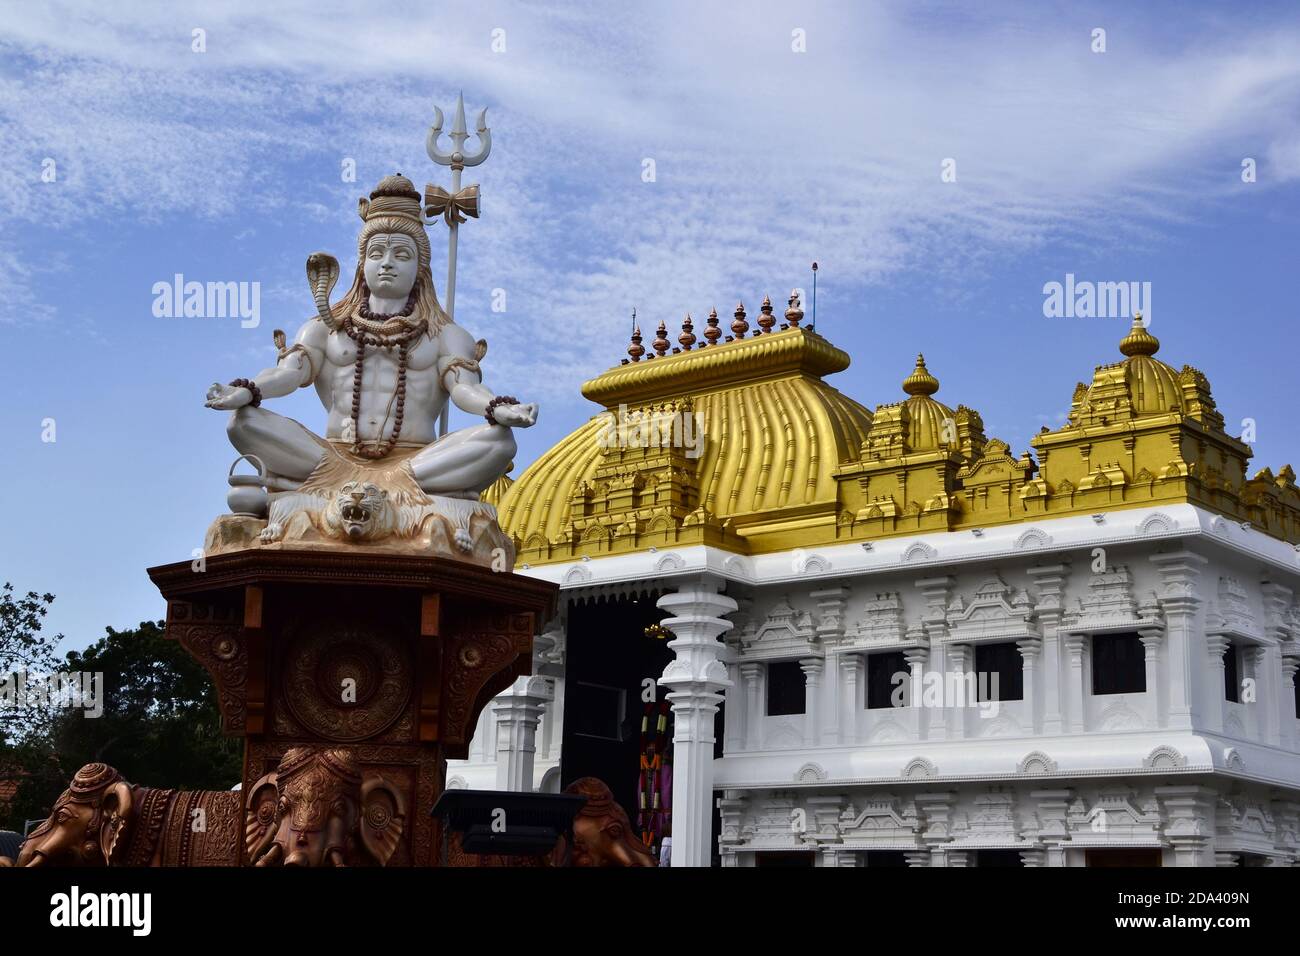 Shiva Statue in der Nähe hinduismus Tempel mit hellen goldenen Dach. Sri Ramayana Darshanam & BharatMata Sadanam, Kanyakumari, Indien Stockfoto